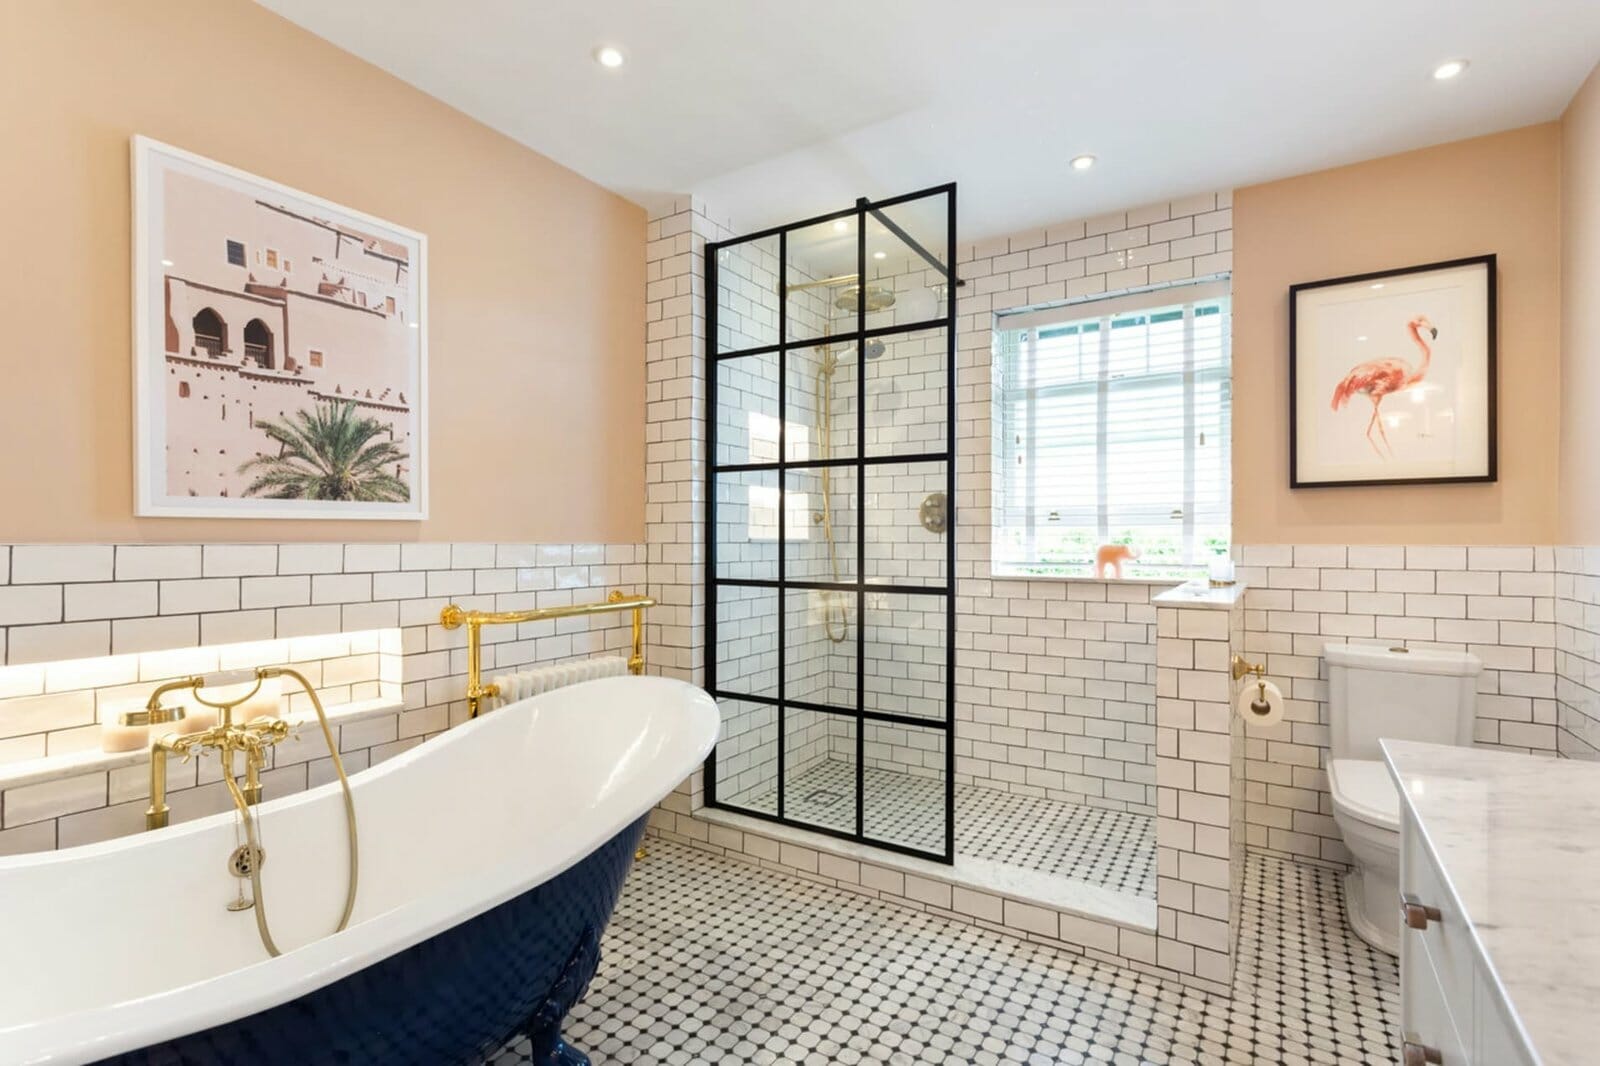 https://www.decorilla.com/online-decorating/wp-content/uploads/2020/08/Bathroom-tile-ideas-with-a-vintage-vibe.jpg